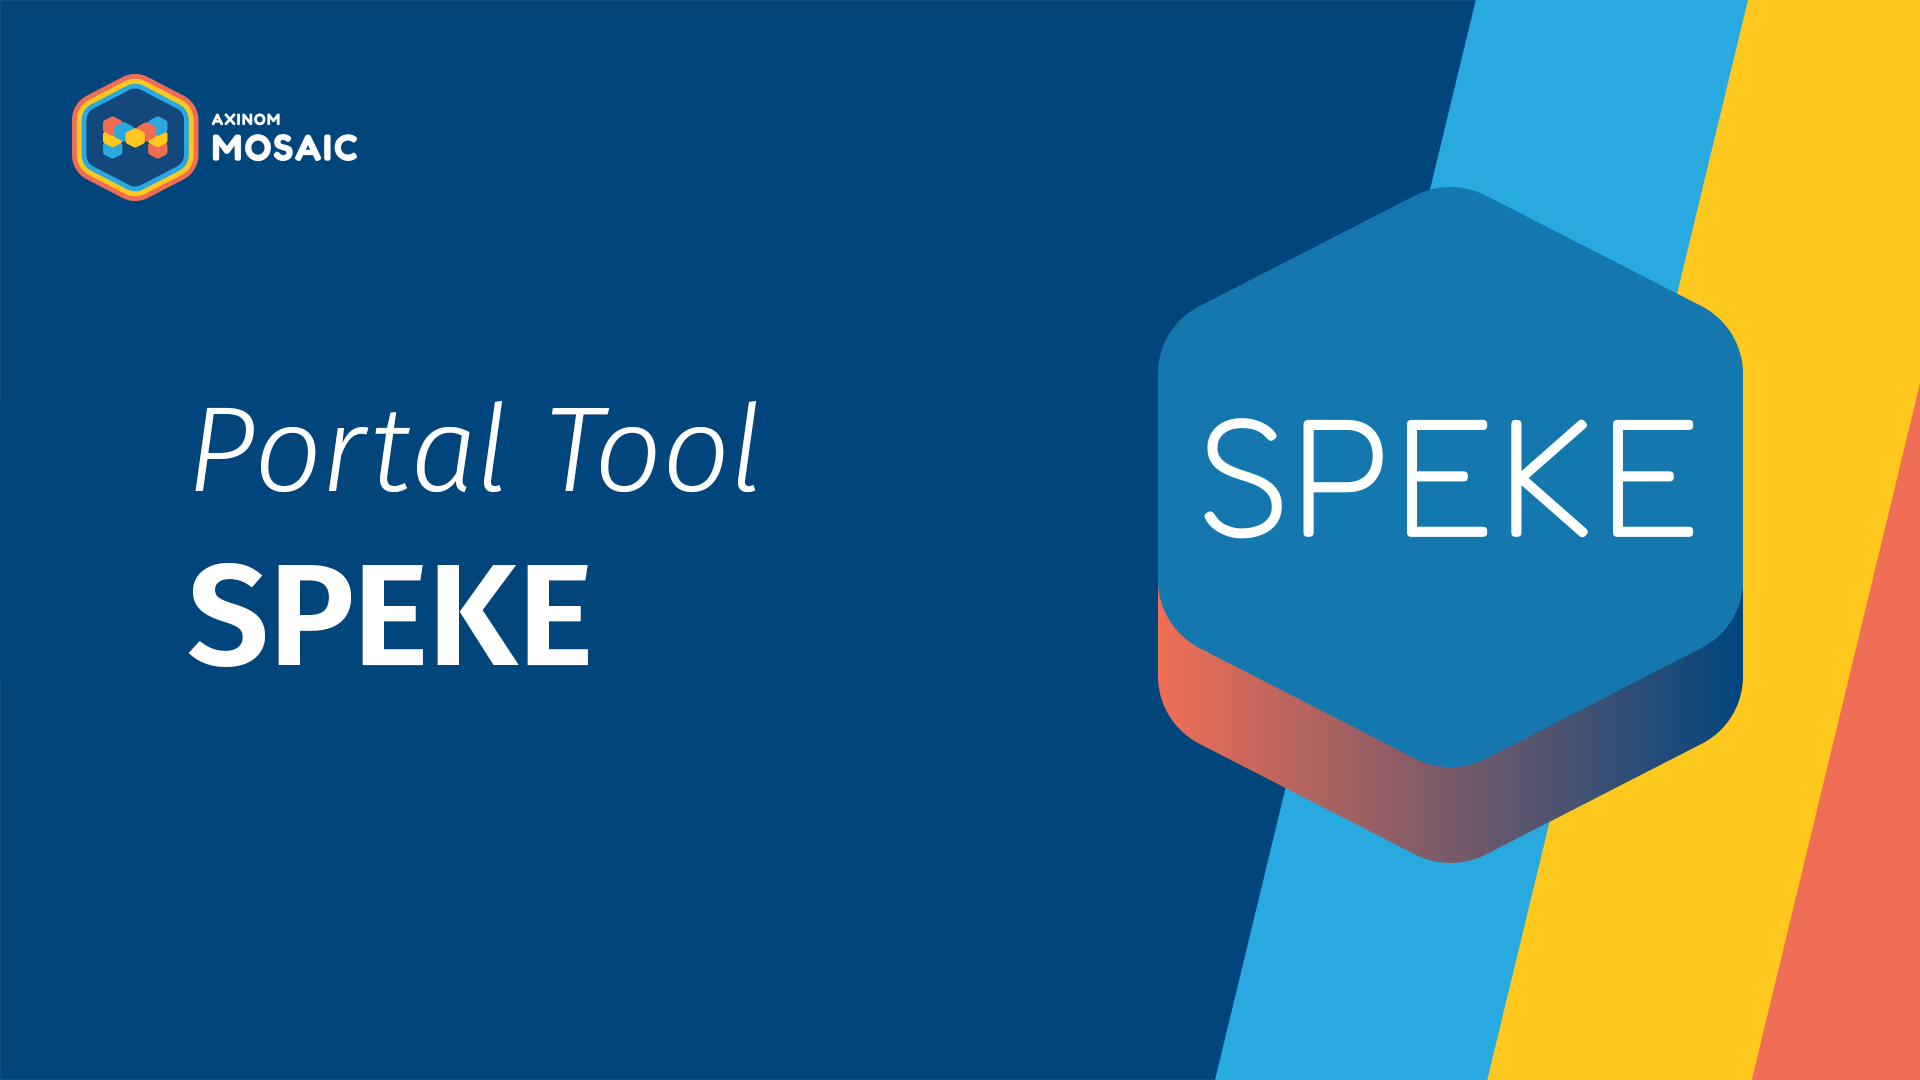 Portal tool: SPEKE